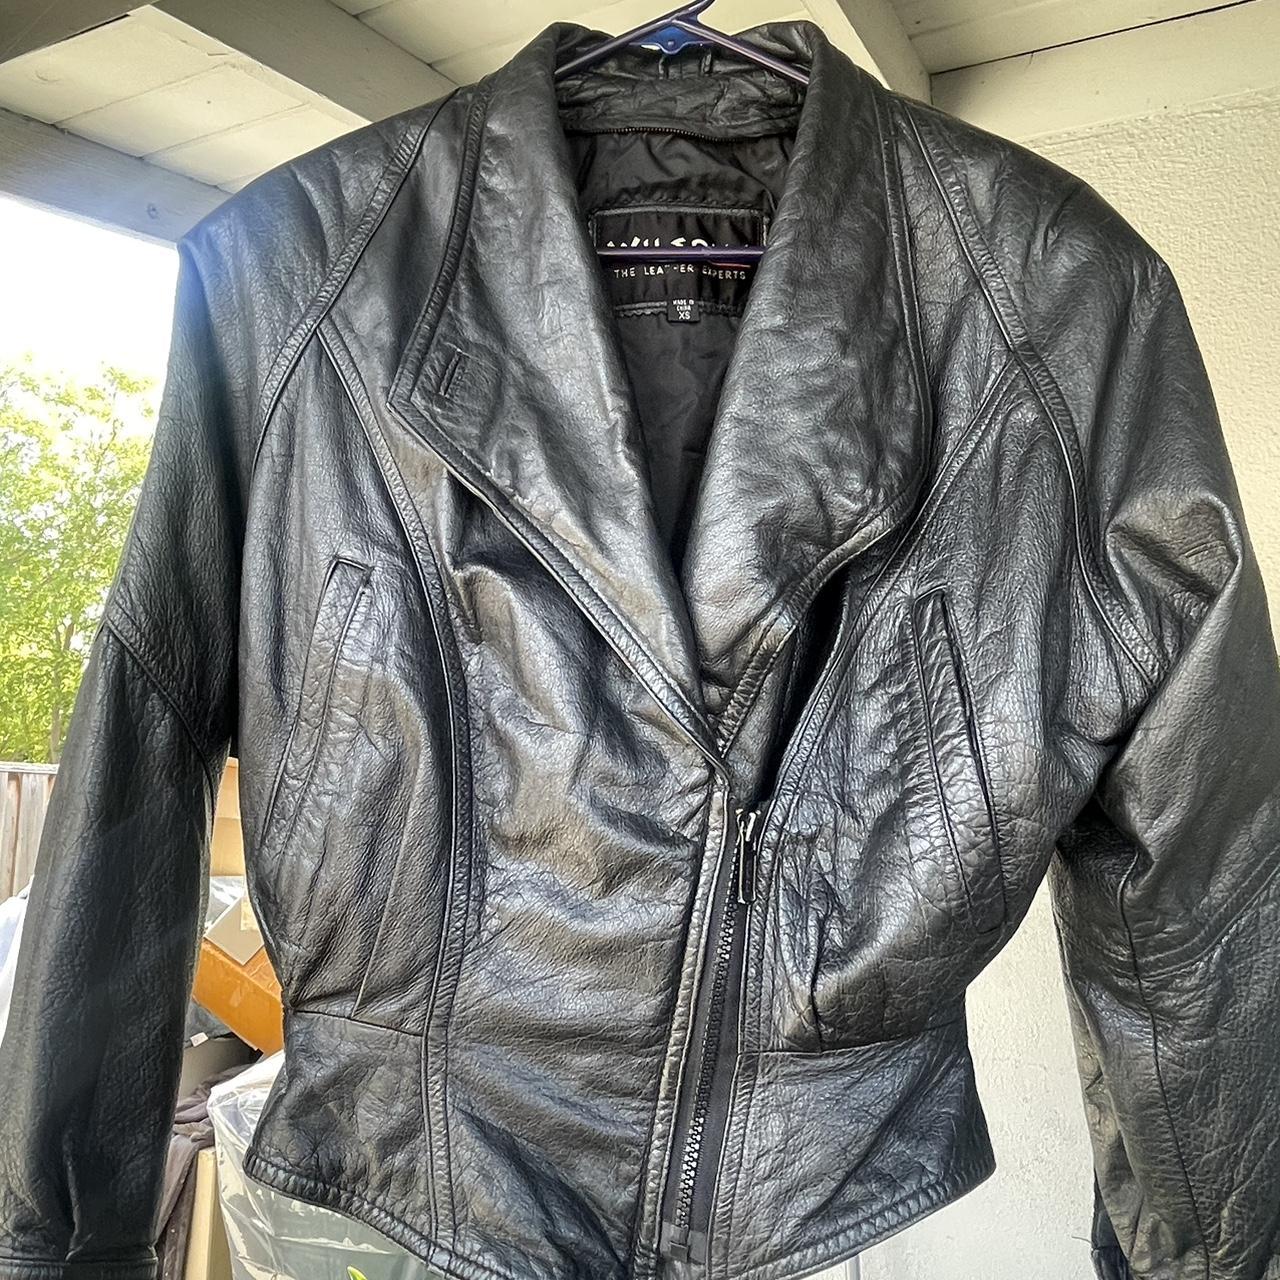 vintage denim work jacket sweet 70s/80s carhartt - Depop